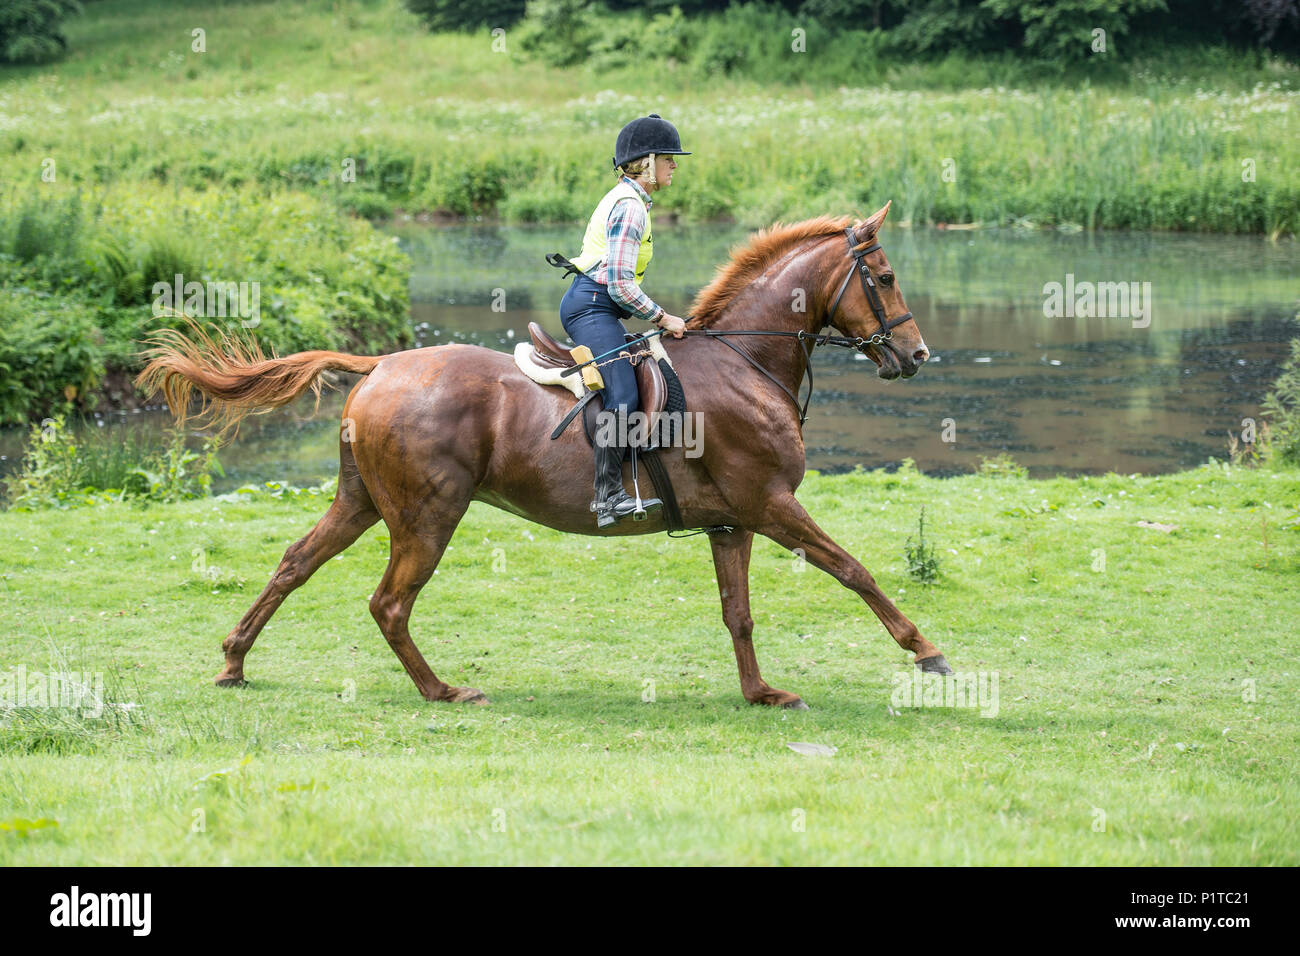 Galloping horse rider par un lac Banque D'Images